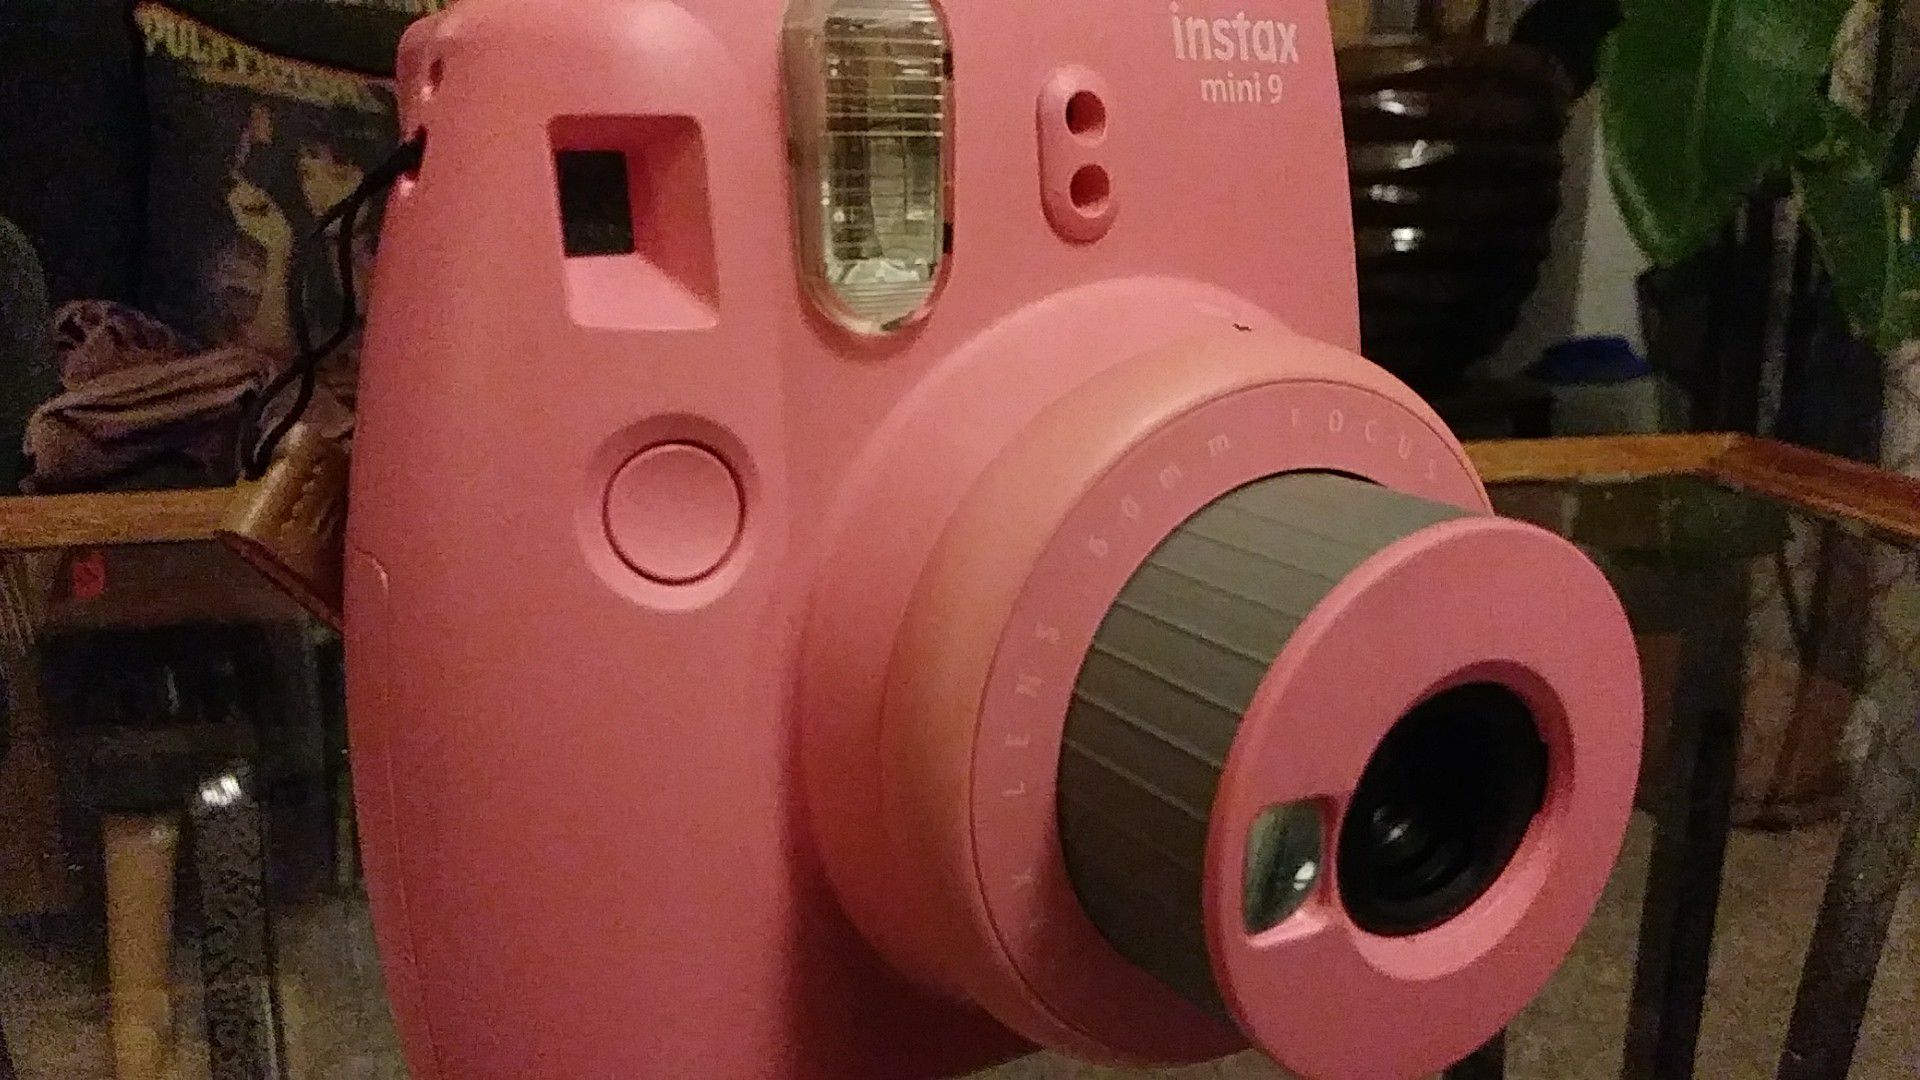 Instax mini 9 Polaroid instant camera